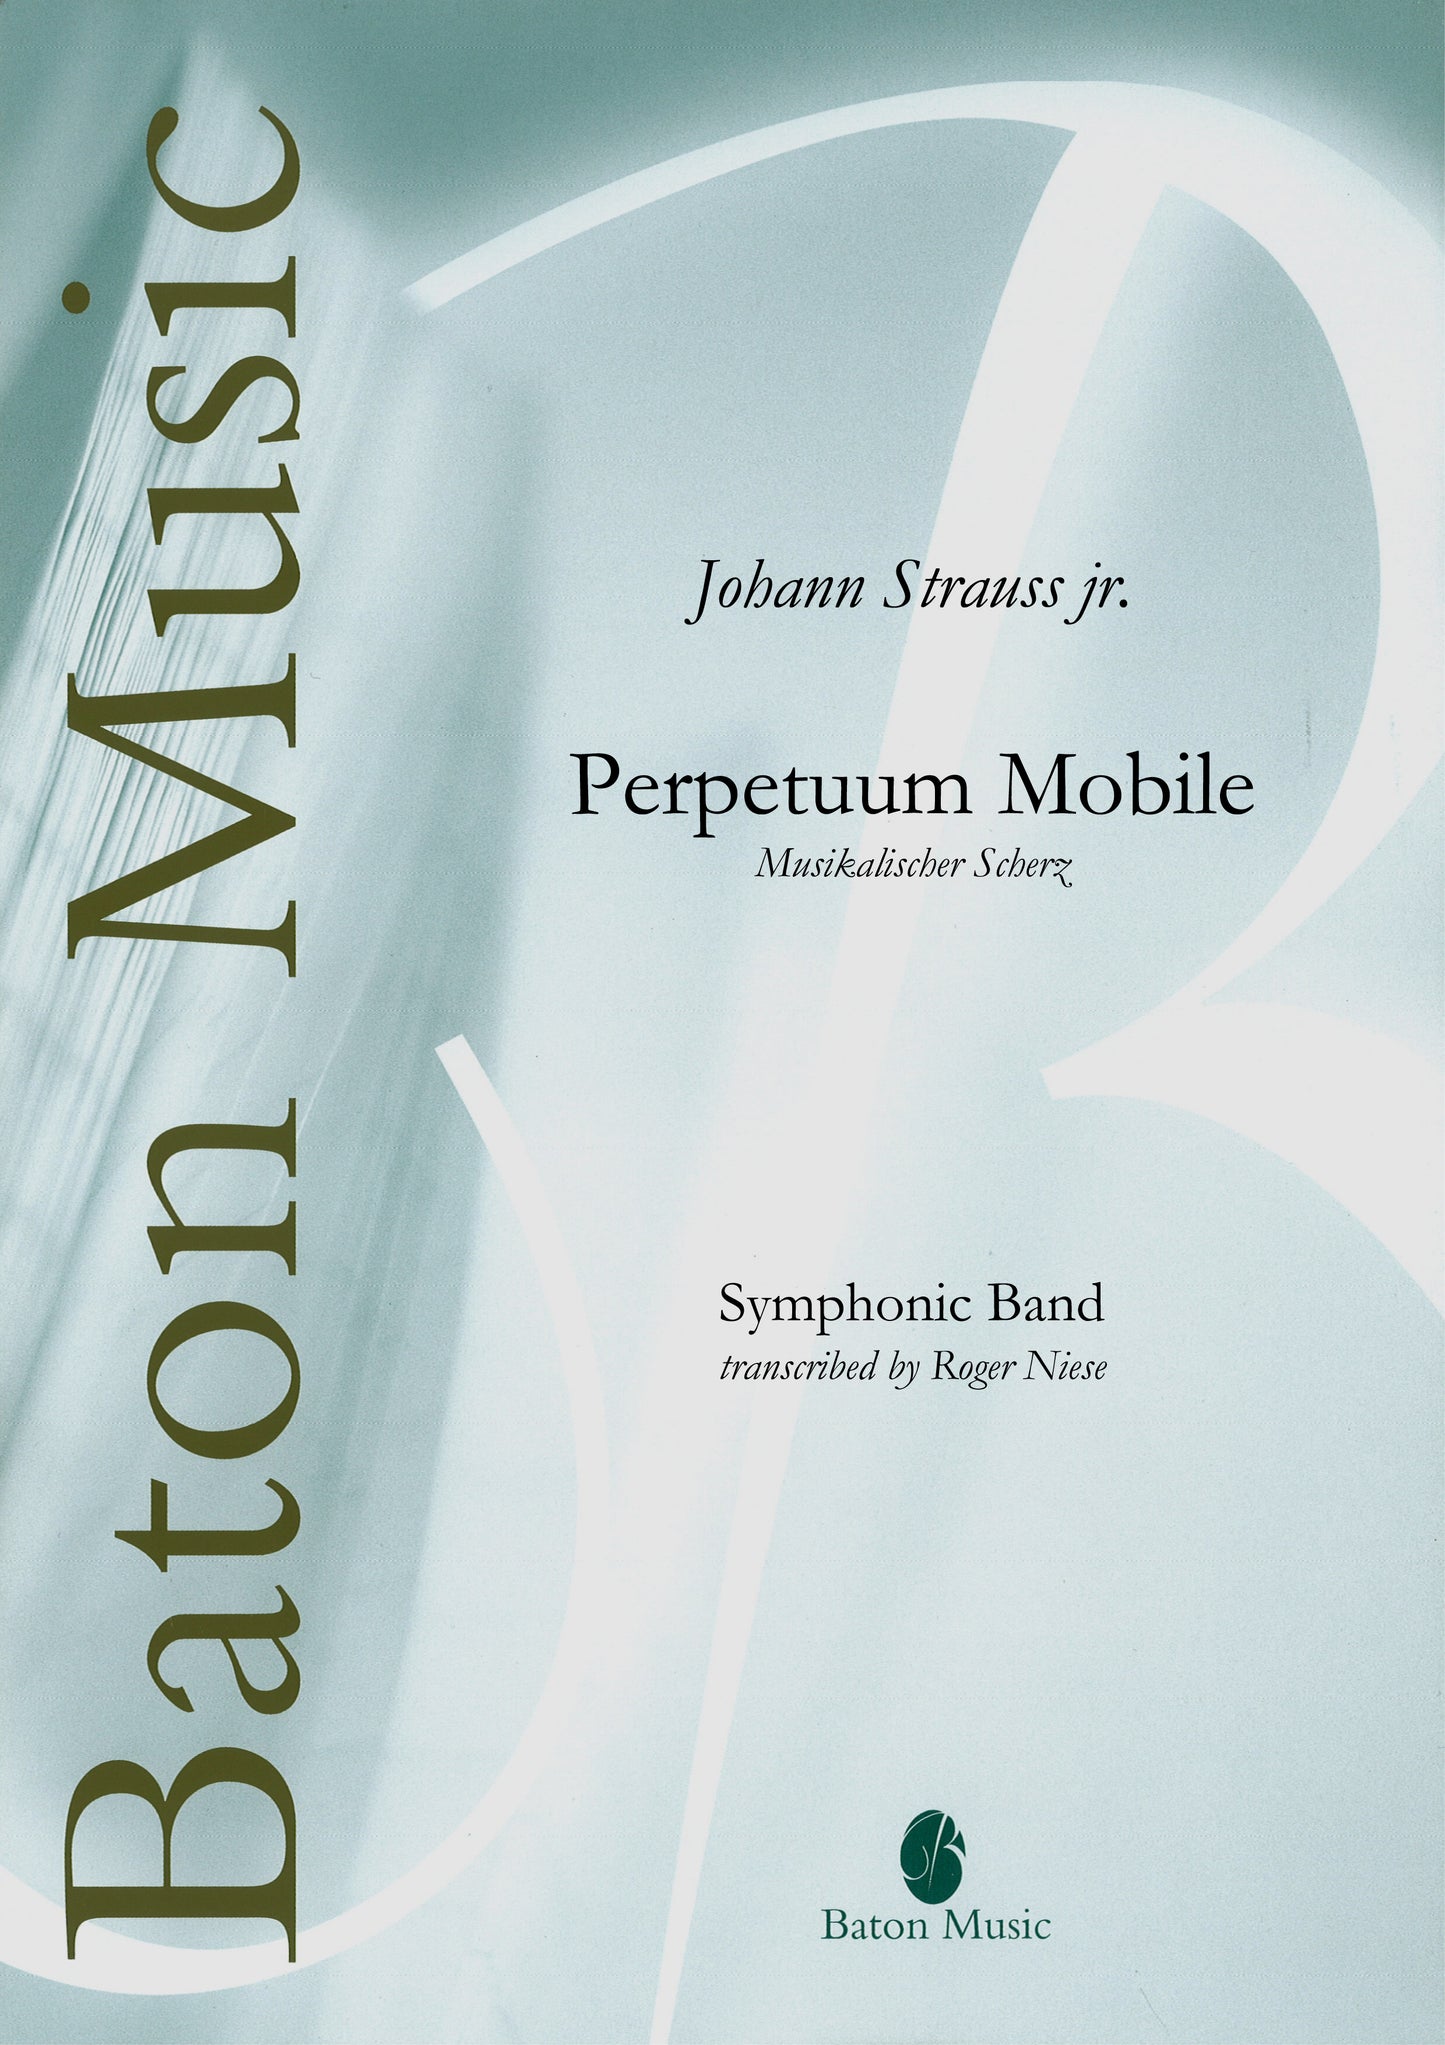 Perpetuum Mobile - Johann Strauss